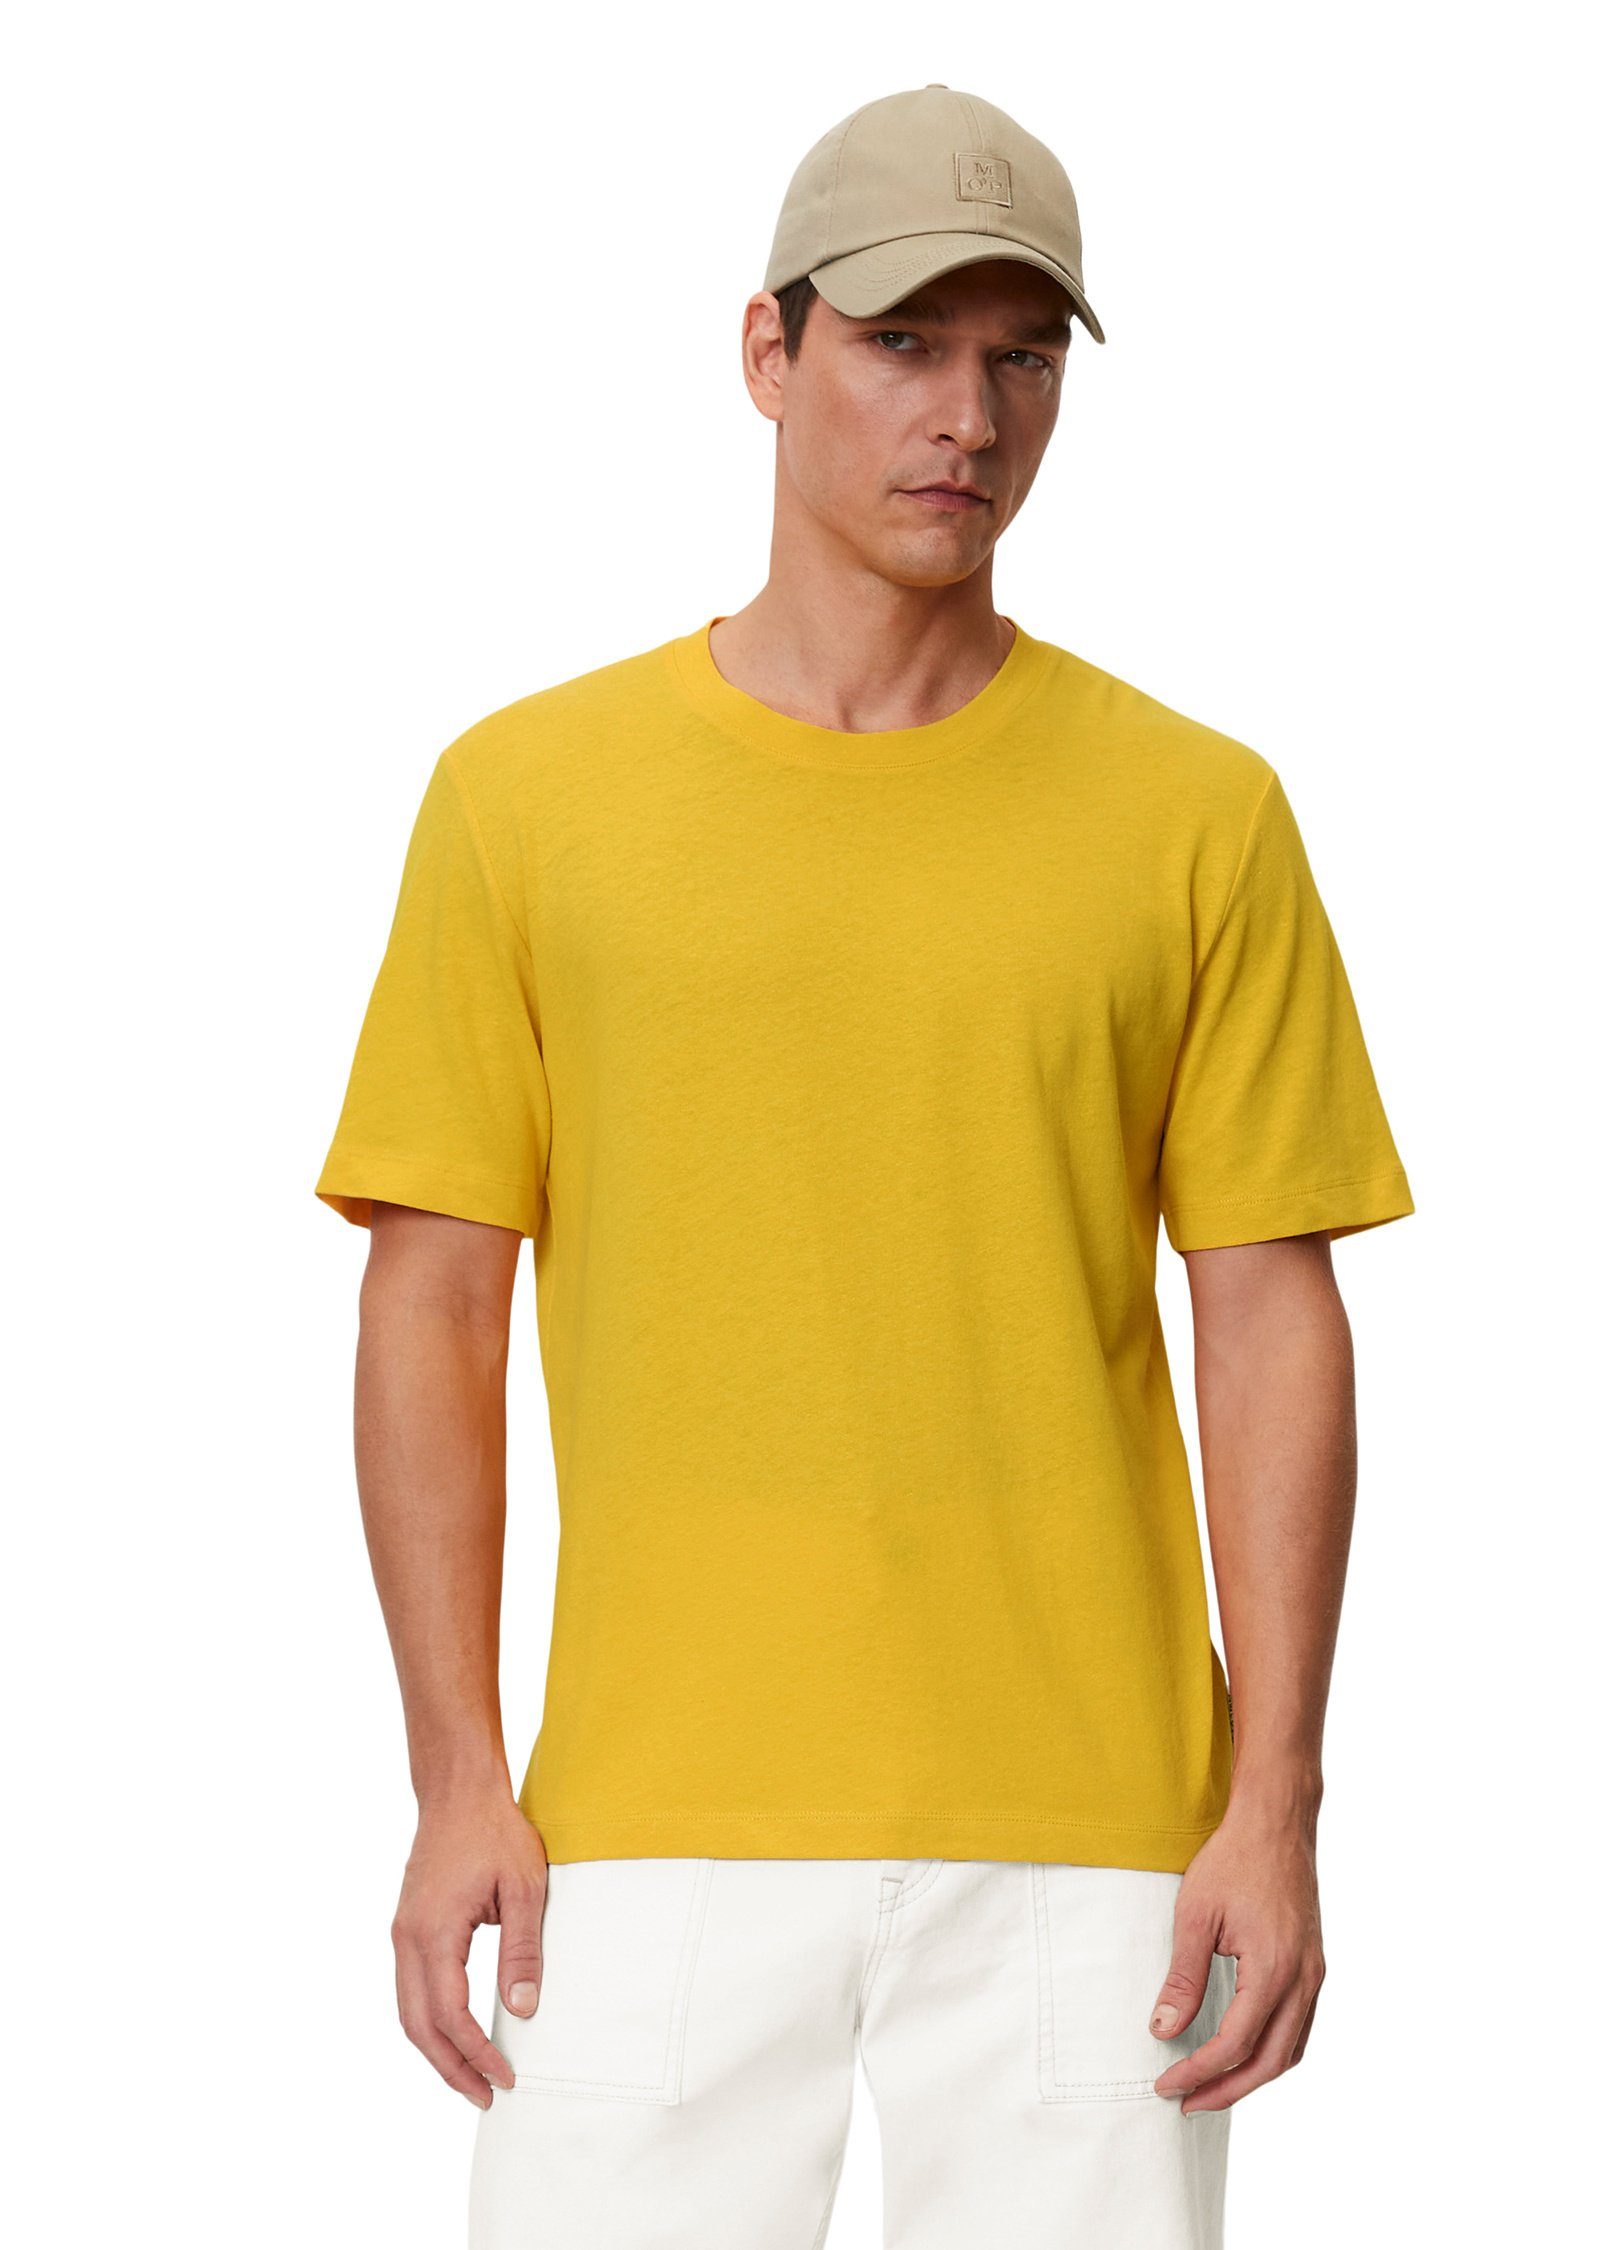 O'Polo T-Shirt Bio-Baumwolle-Leinen-Mix gelb Marc aus